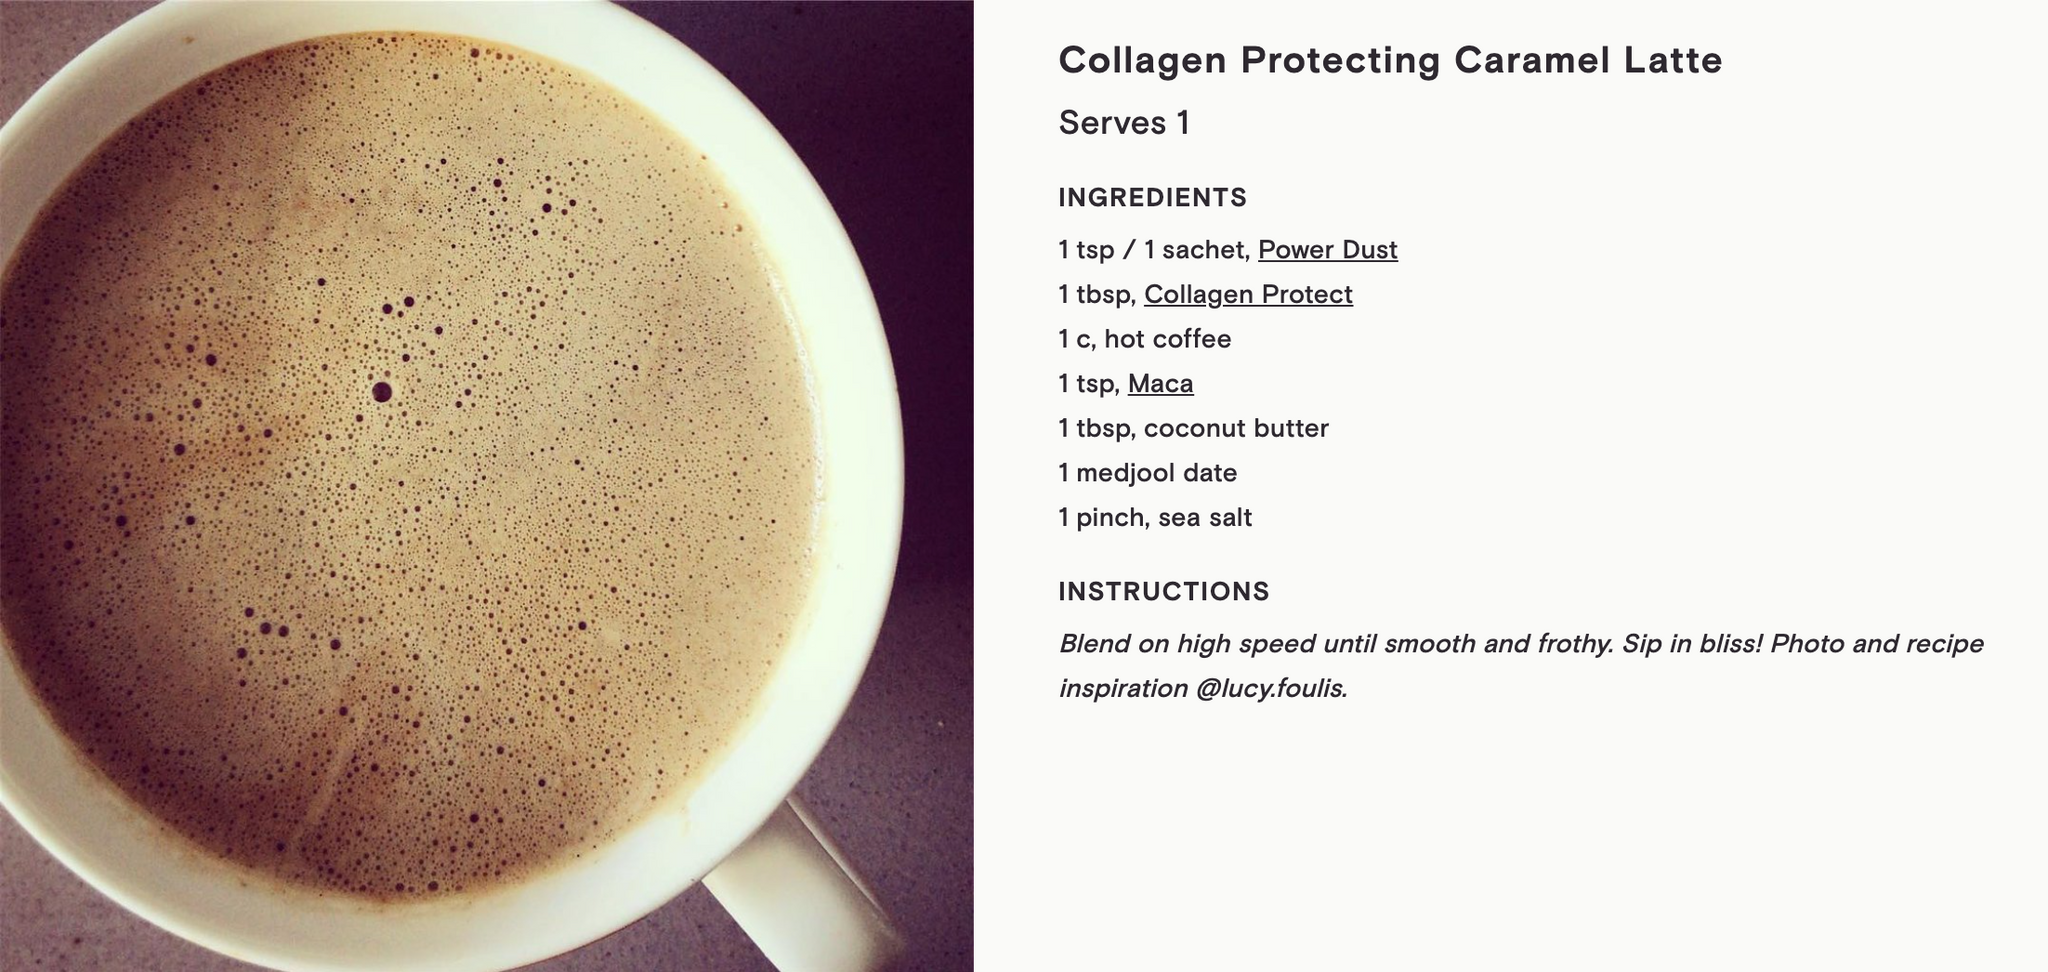 Moon Juice Power Dust Recipe | Collagen Protecting Caramel Latte